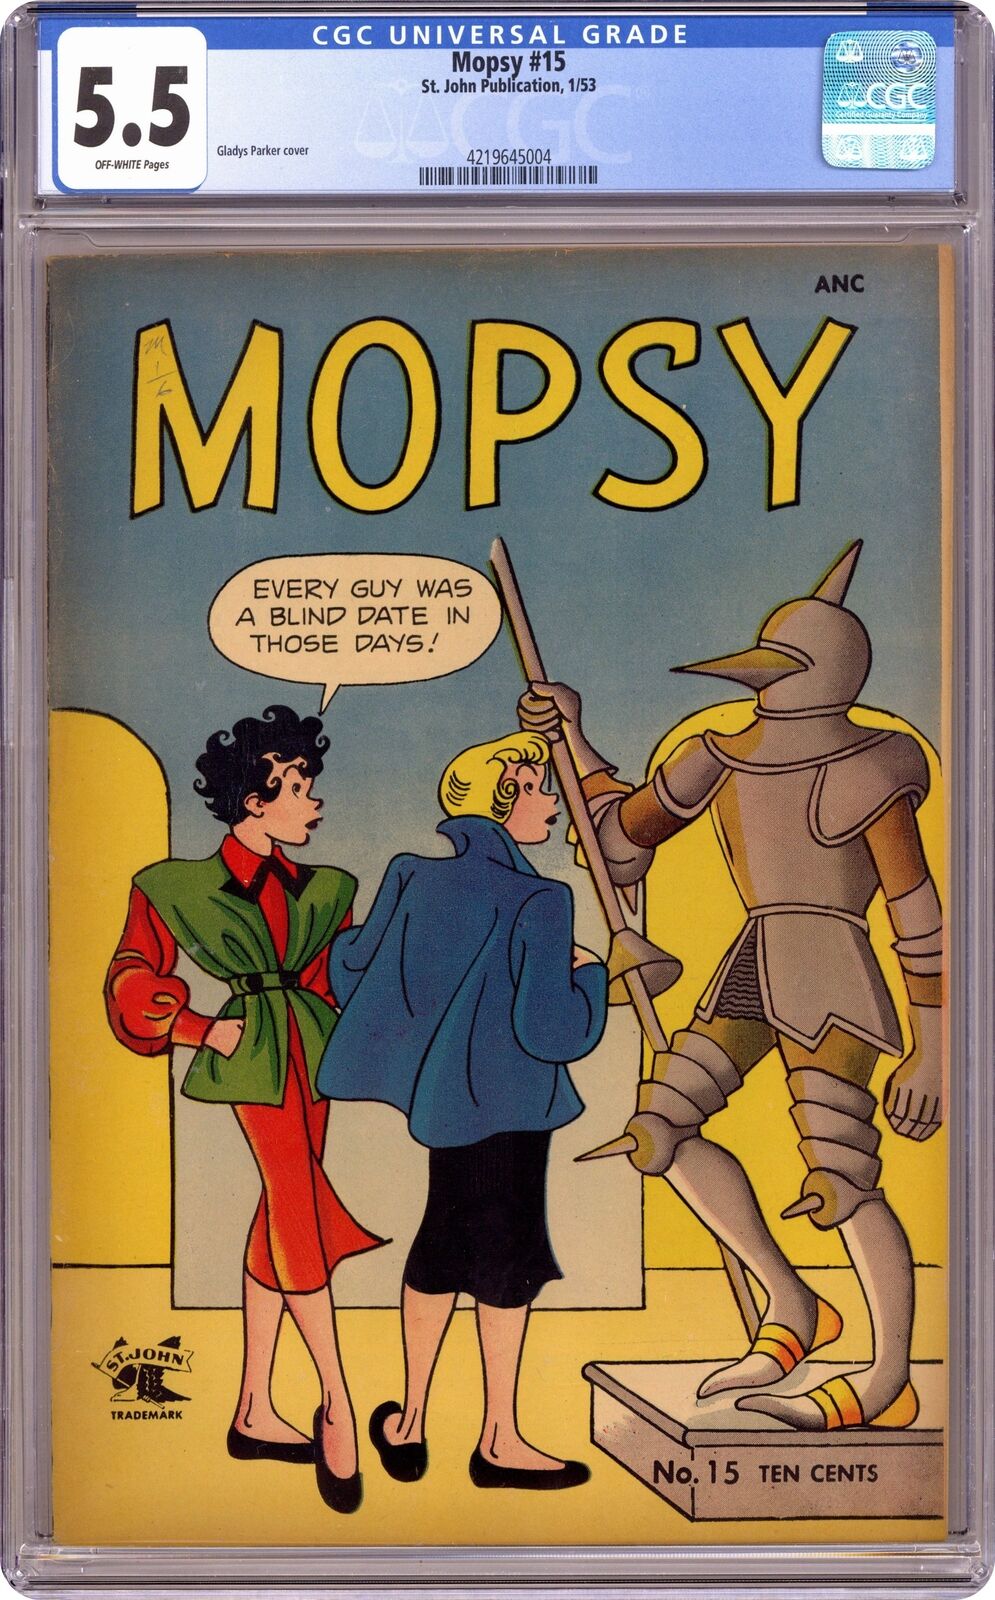 Mopsy #15 CGC 5.5 1953 4219645004